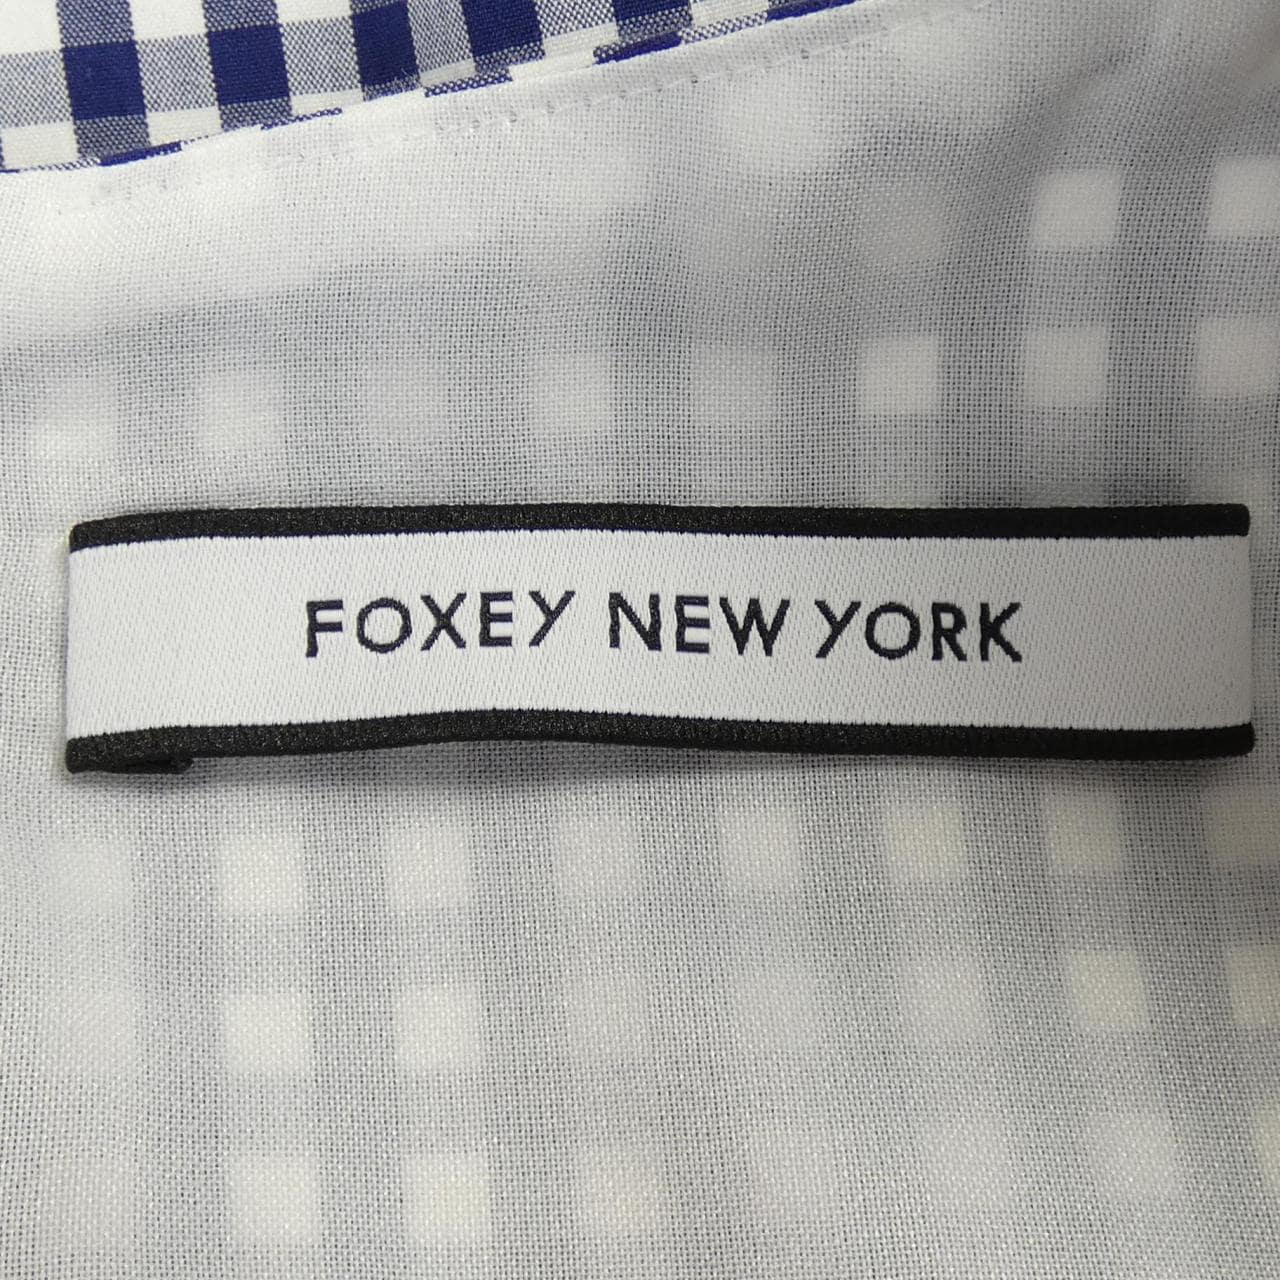 Foxy New York FOXEY NEW YORK dress